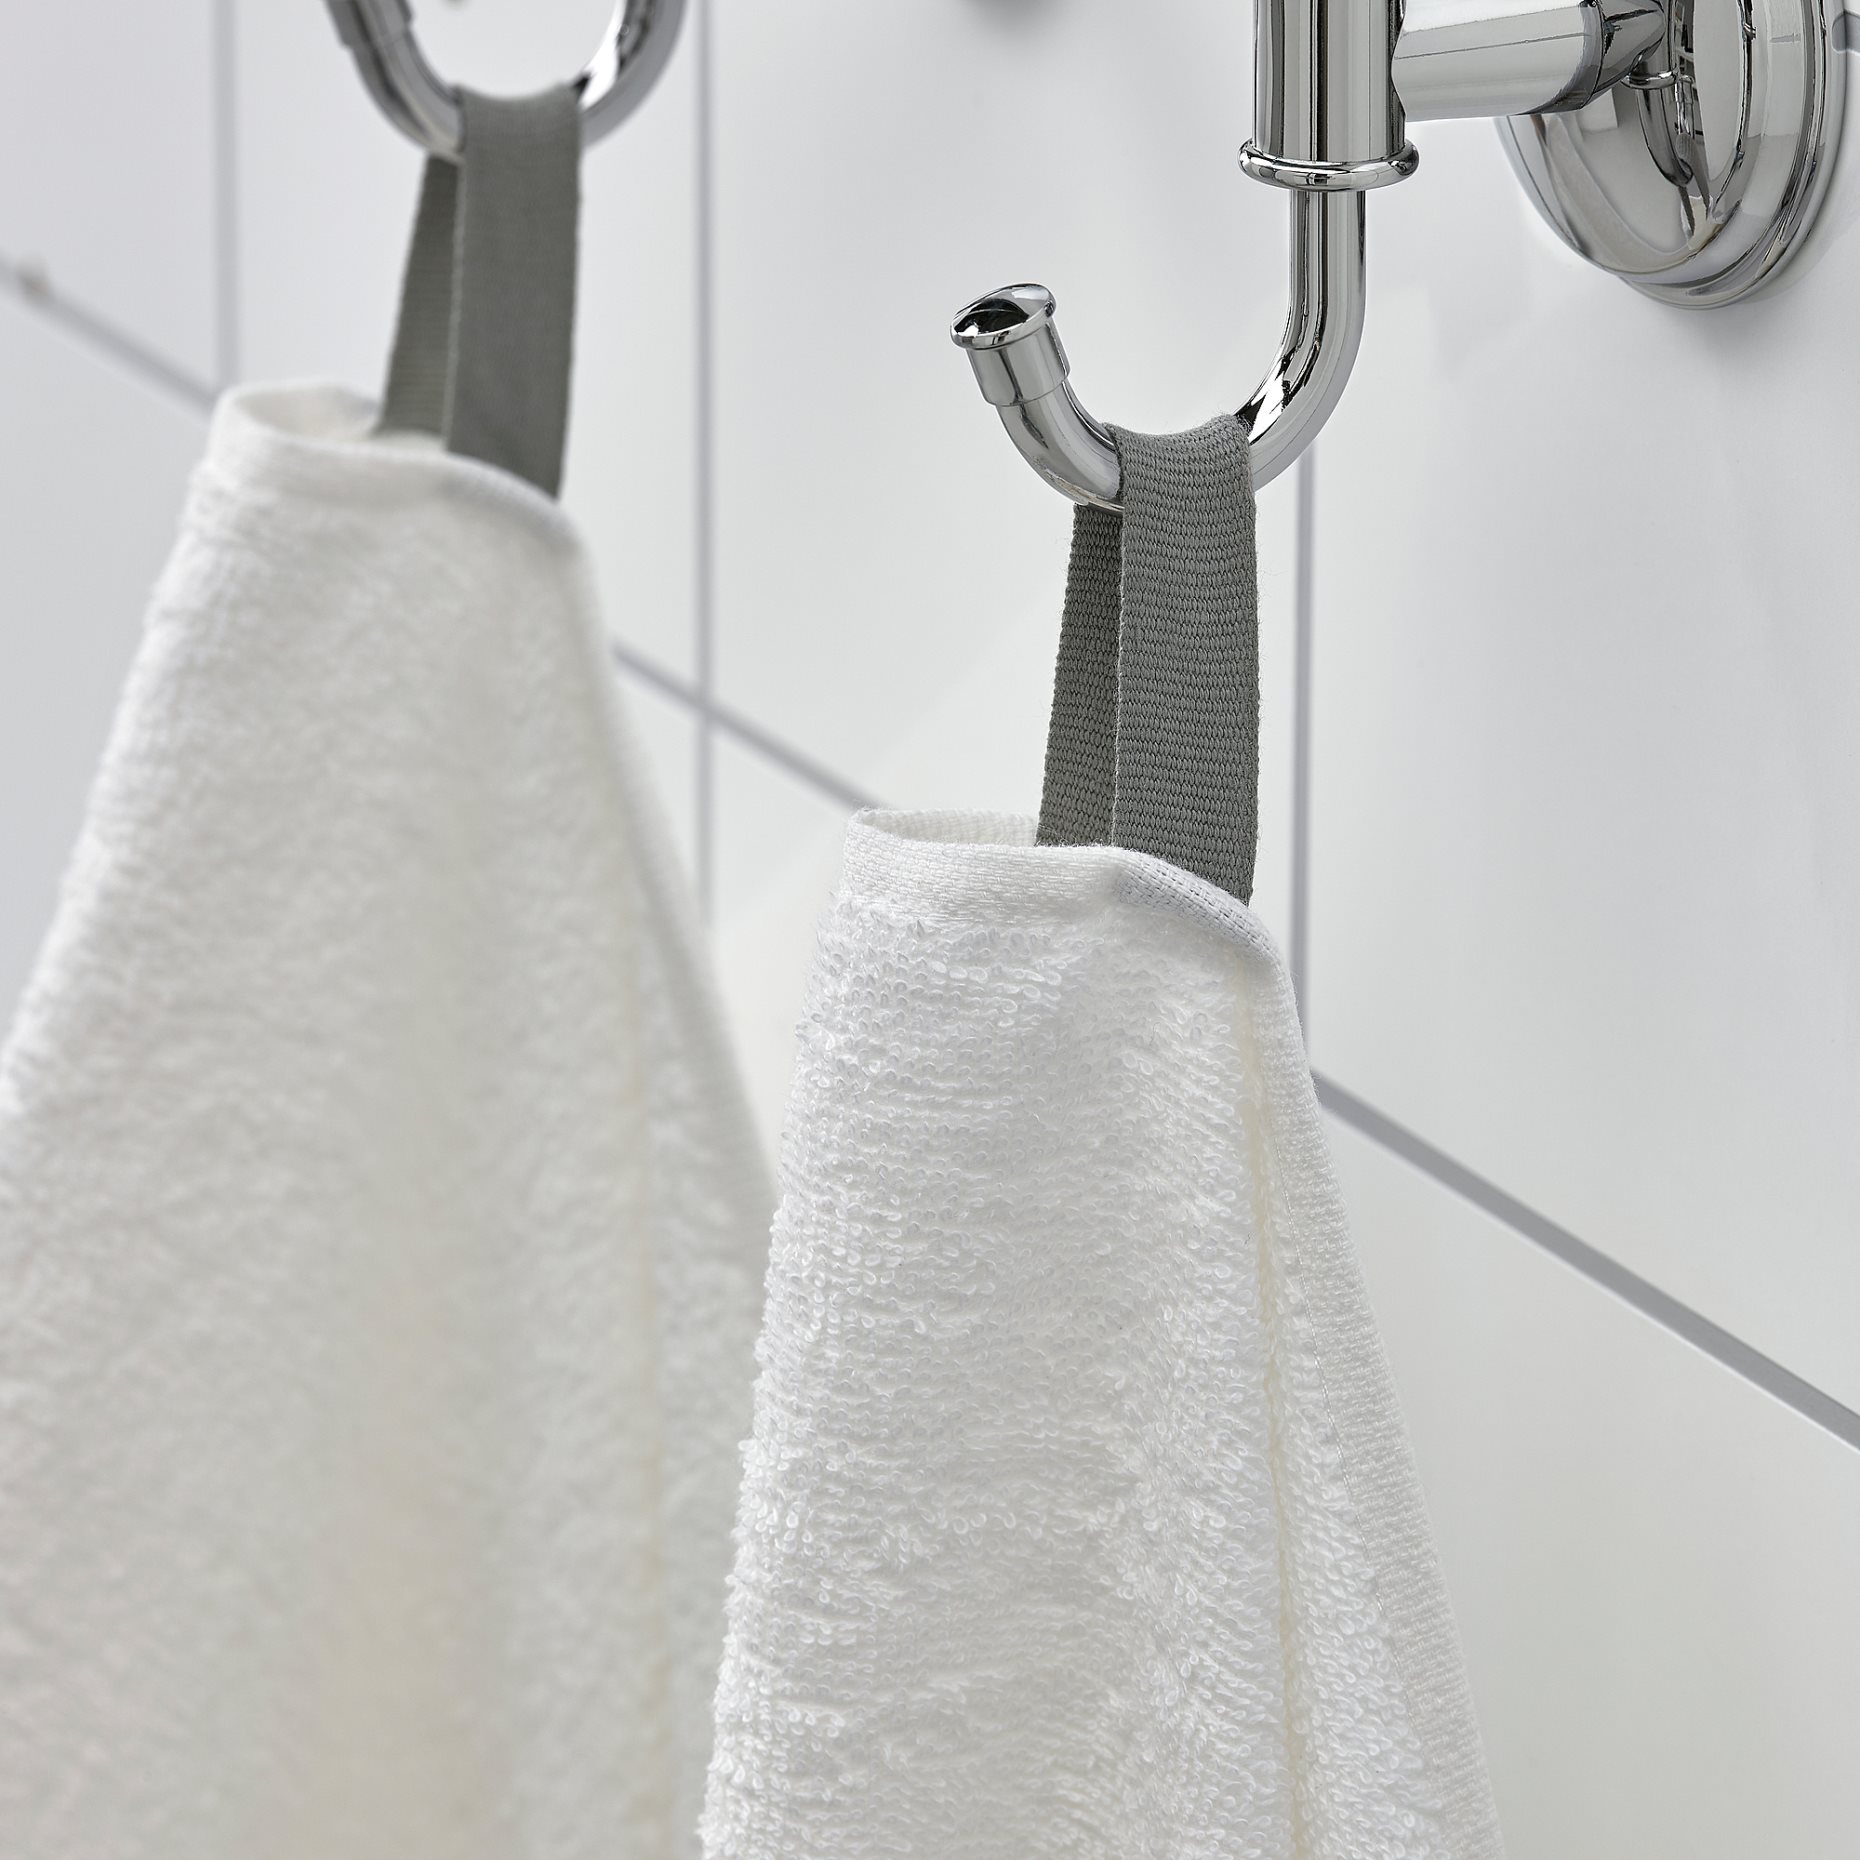 DIMFORSEN, πετσέτα μπάνιου, 100x150 cm, 905.128.93